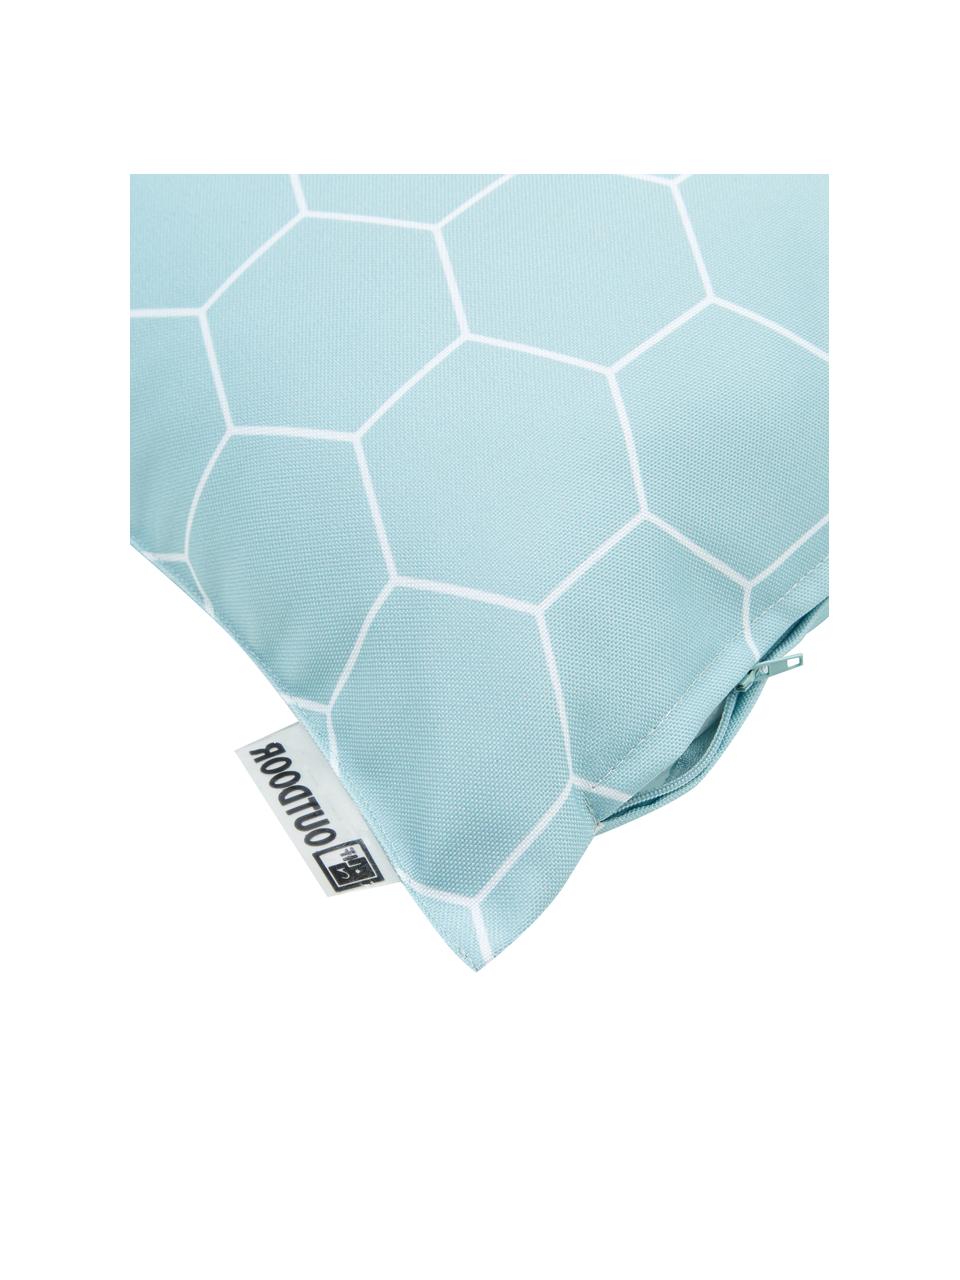 Coussin d'extérieur bleu Honeycomb, 100 % polyester, Bleu, blanc, larg. 47 x long. 47 cm